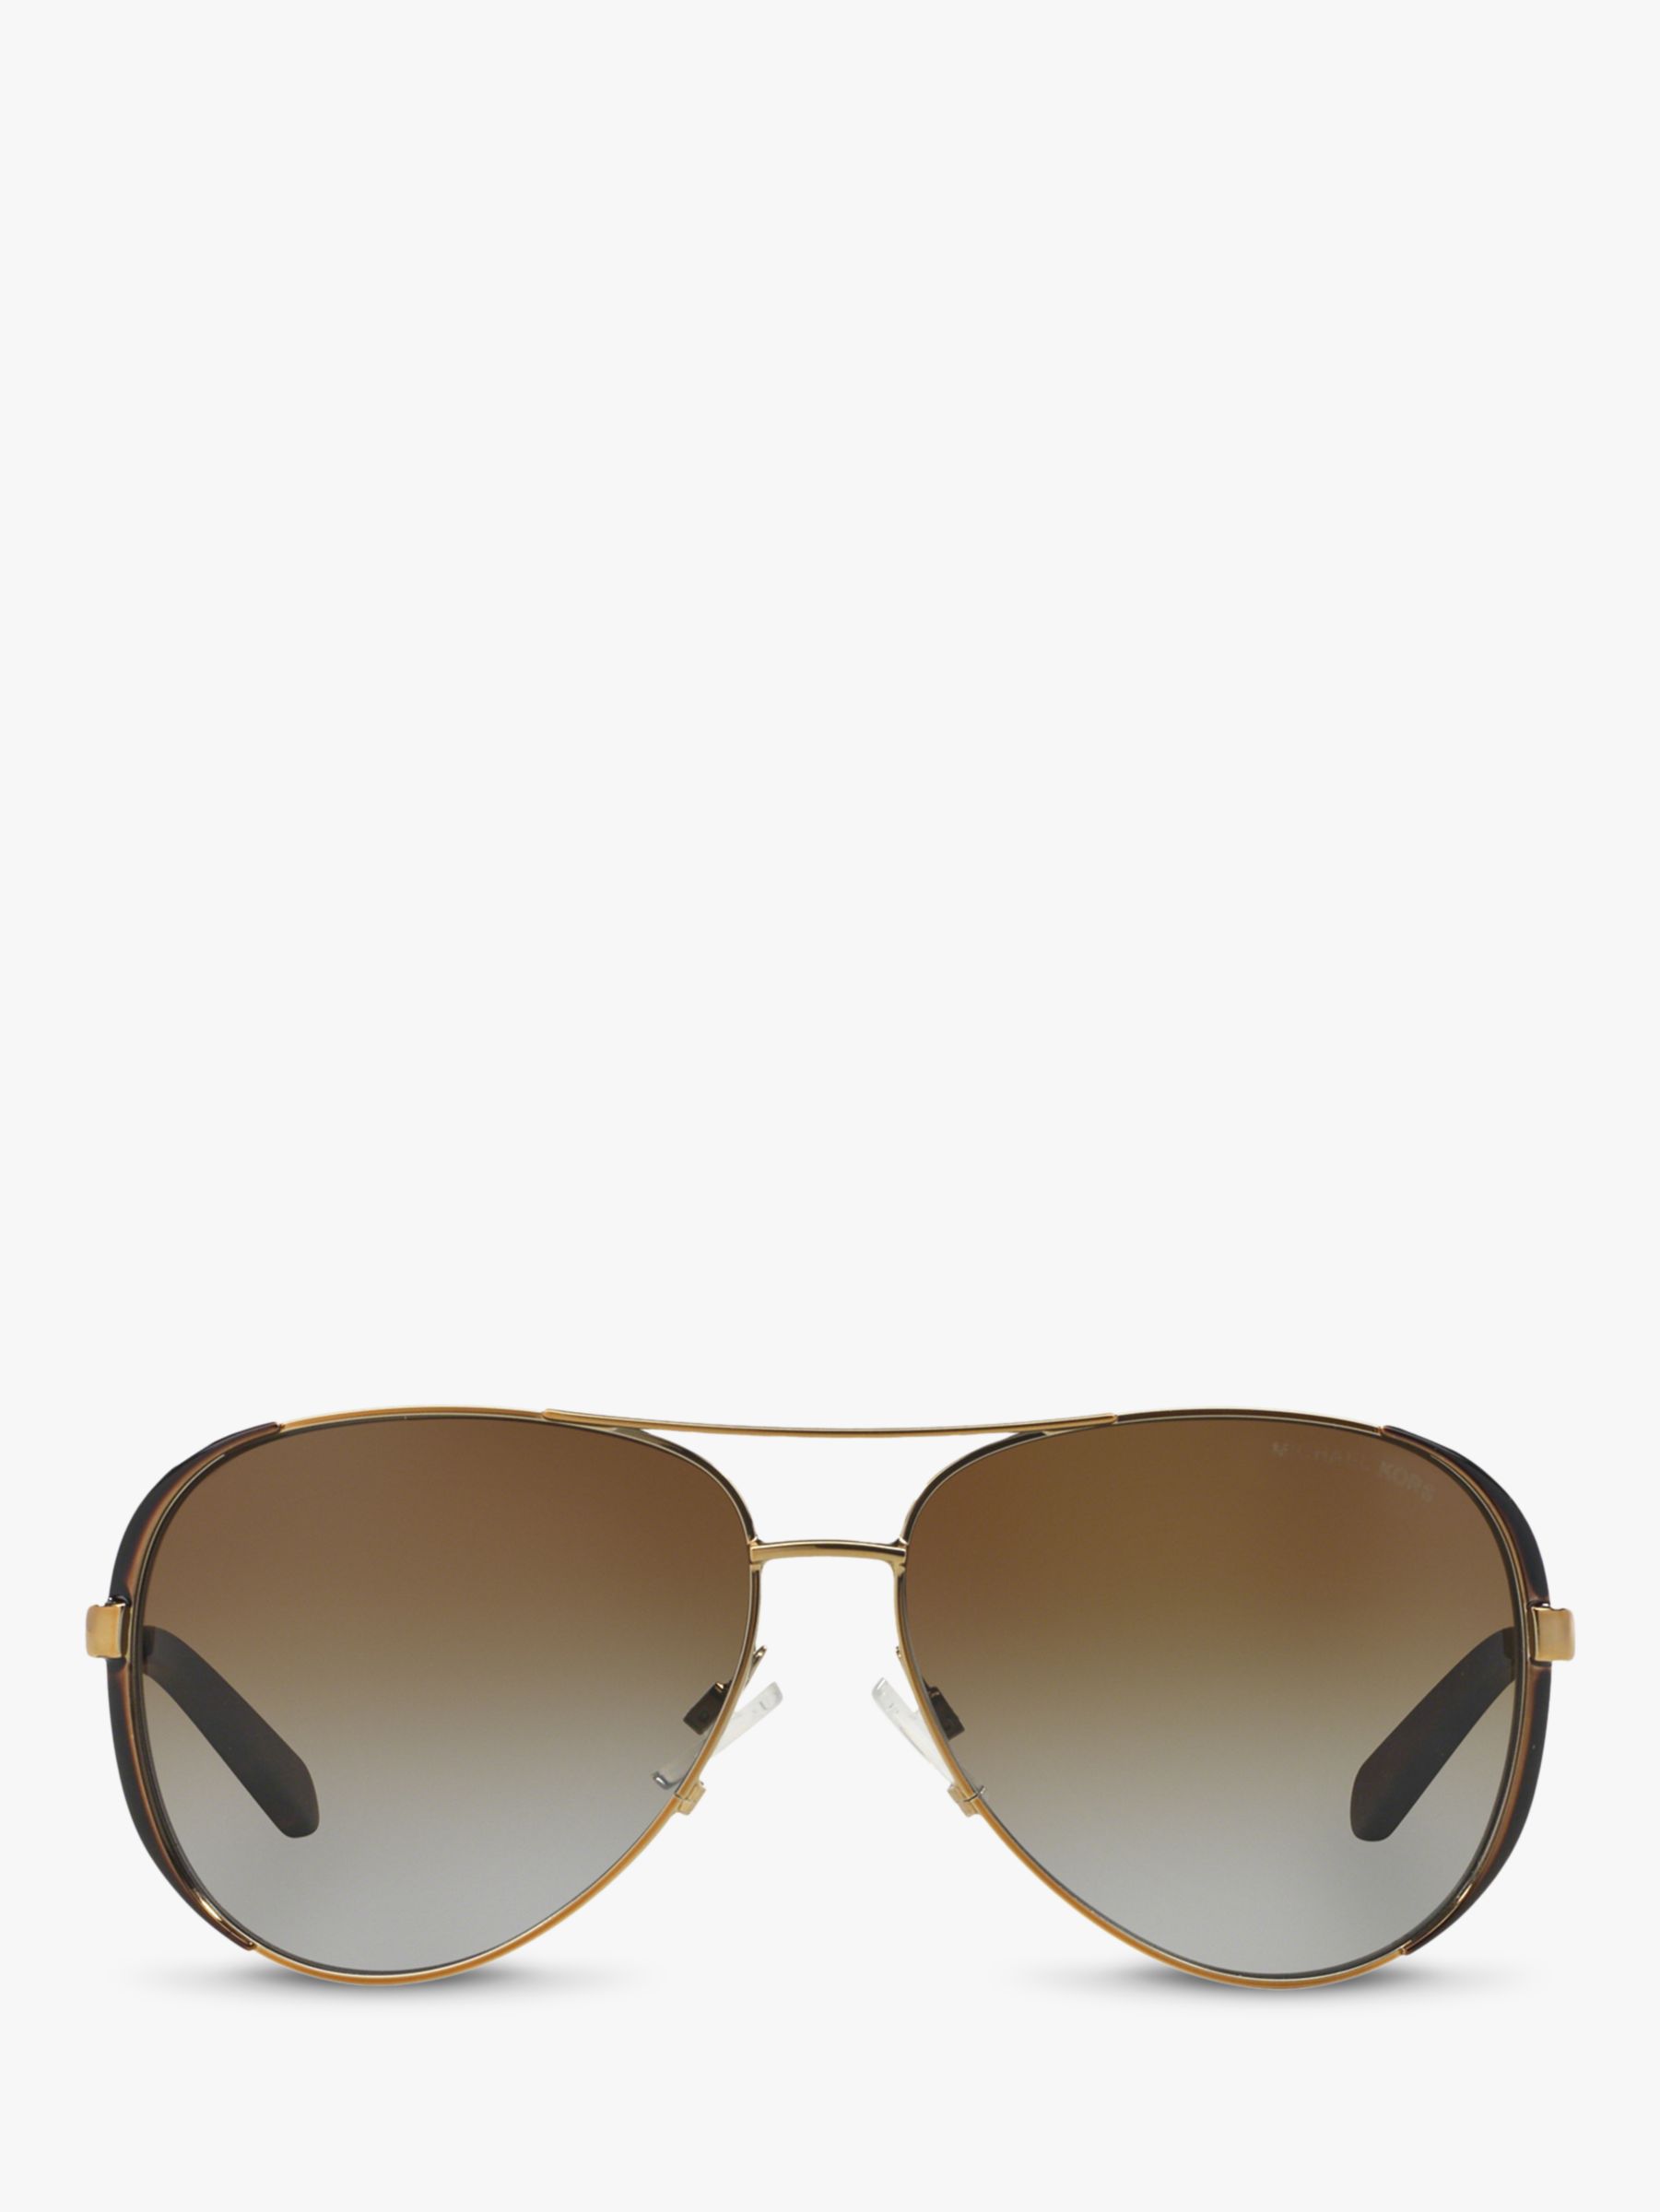 Michael Kors MK5004 Chelsea Polarised Aviator Sunglasses, Brown